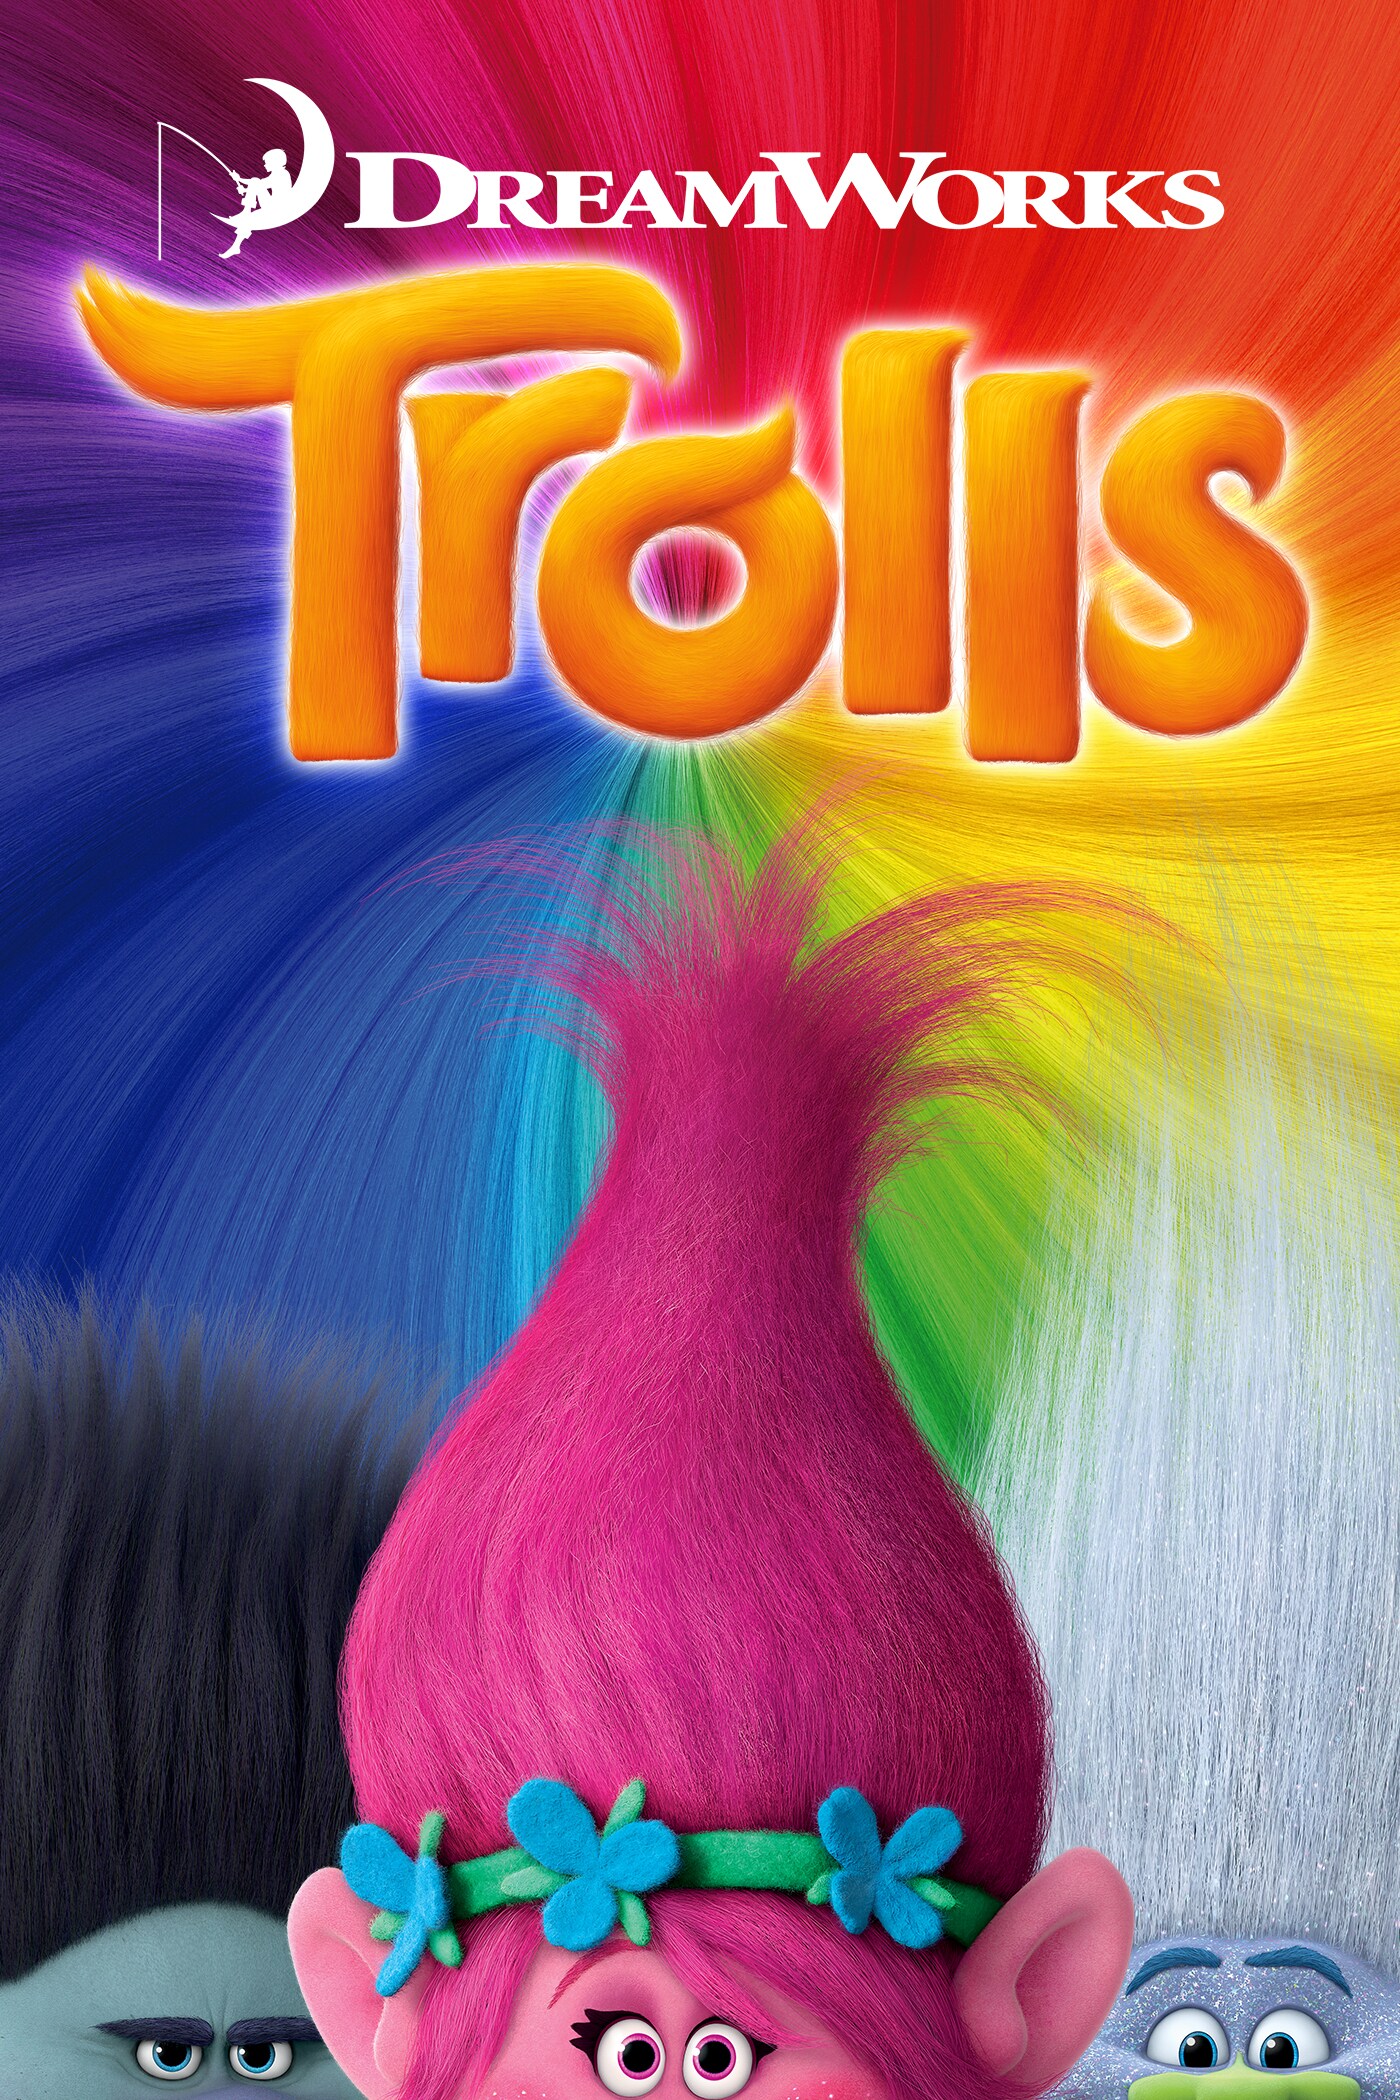 Trolls movie poster